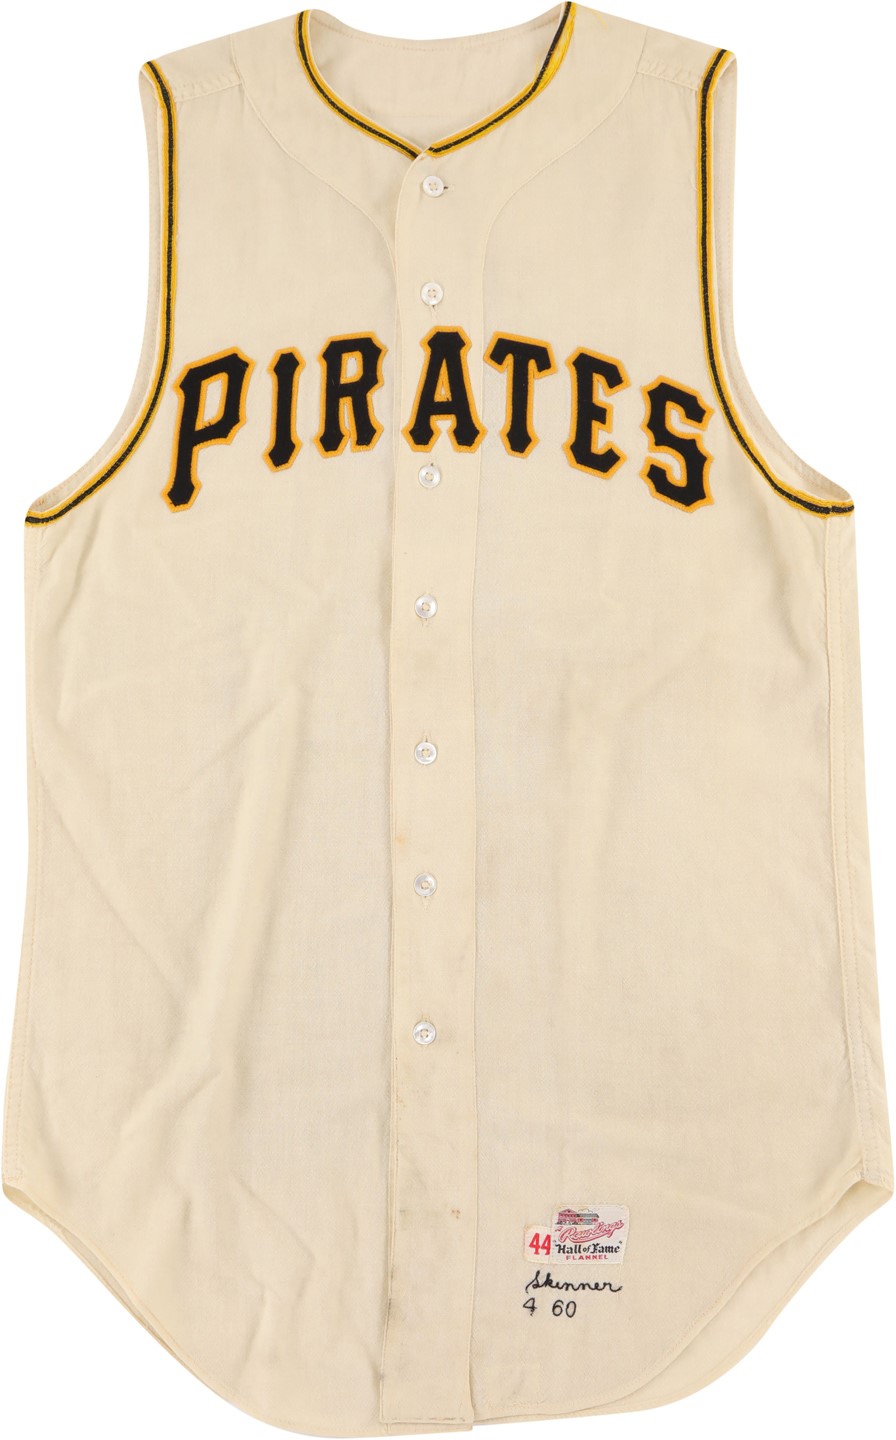 - 1960 Bob Skinner Pittsburgh Pirates Game Worn Jersey - World Championship Season